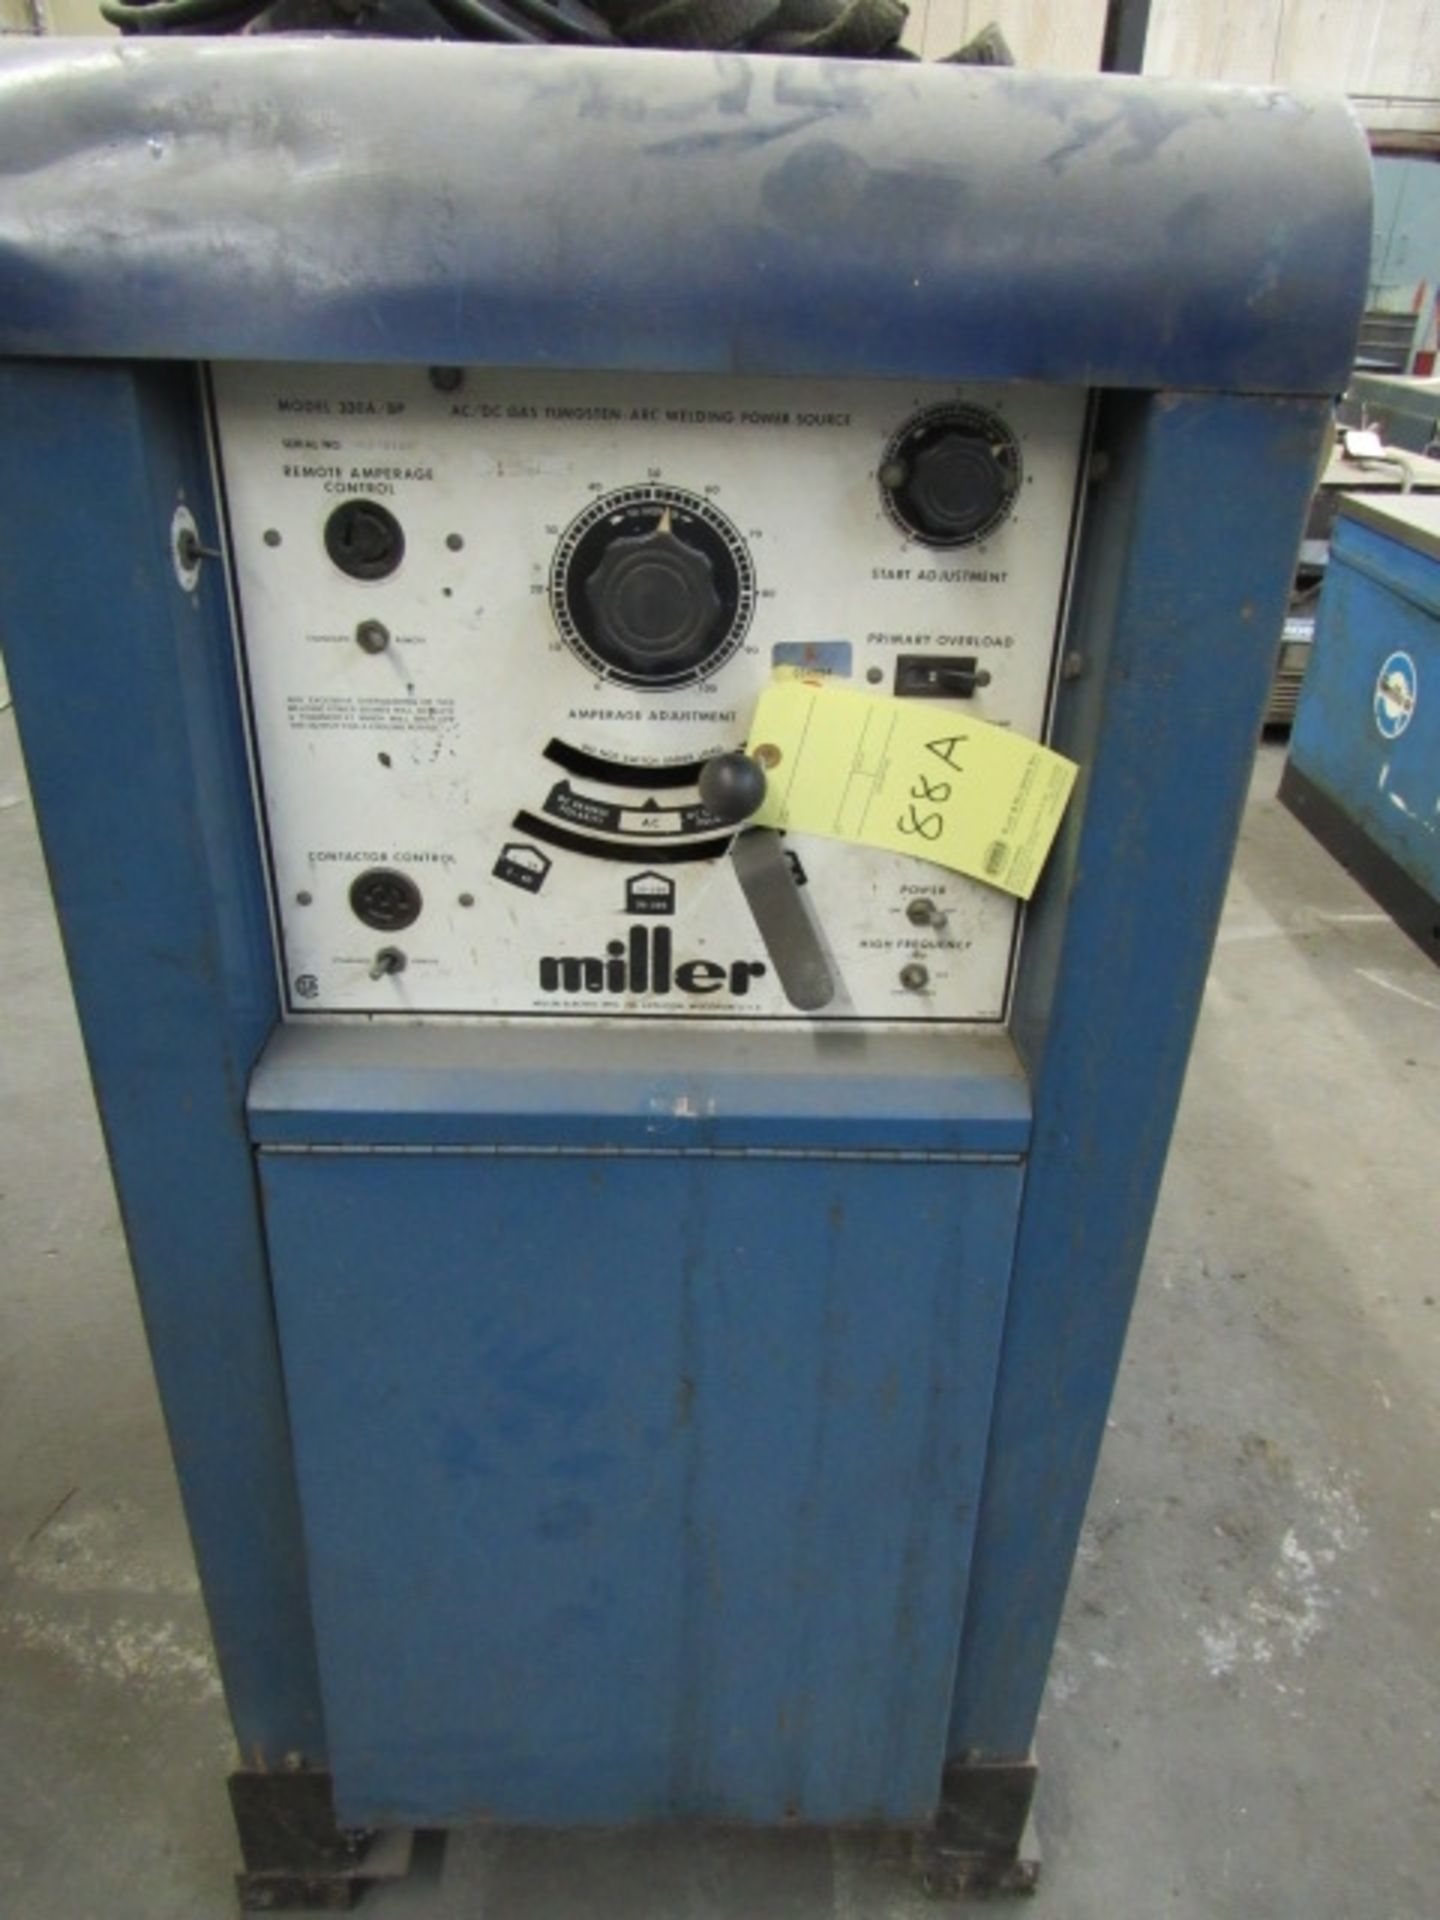 WELDING MACHINE, MILLER MDL. 330A/BP AC/DC GAS TUNGSTEN ARA, S/N HK276148